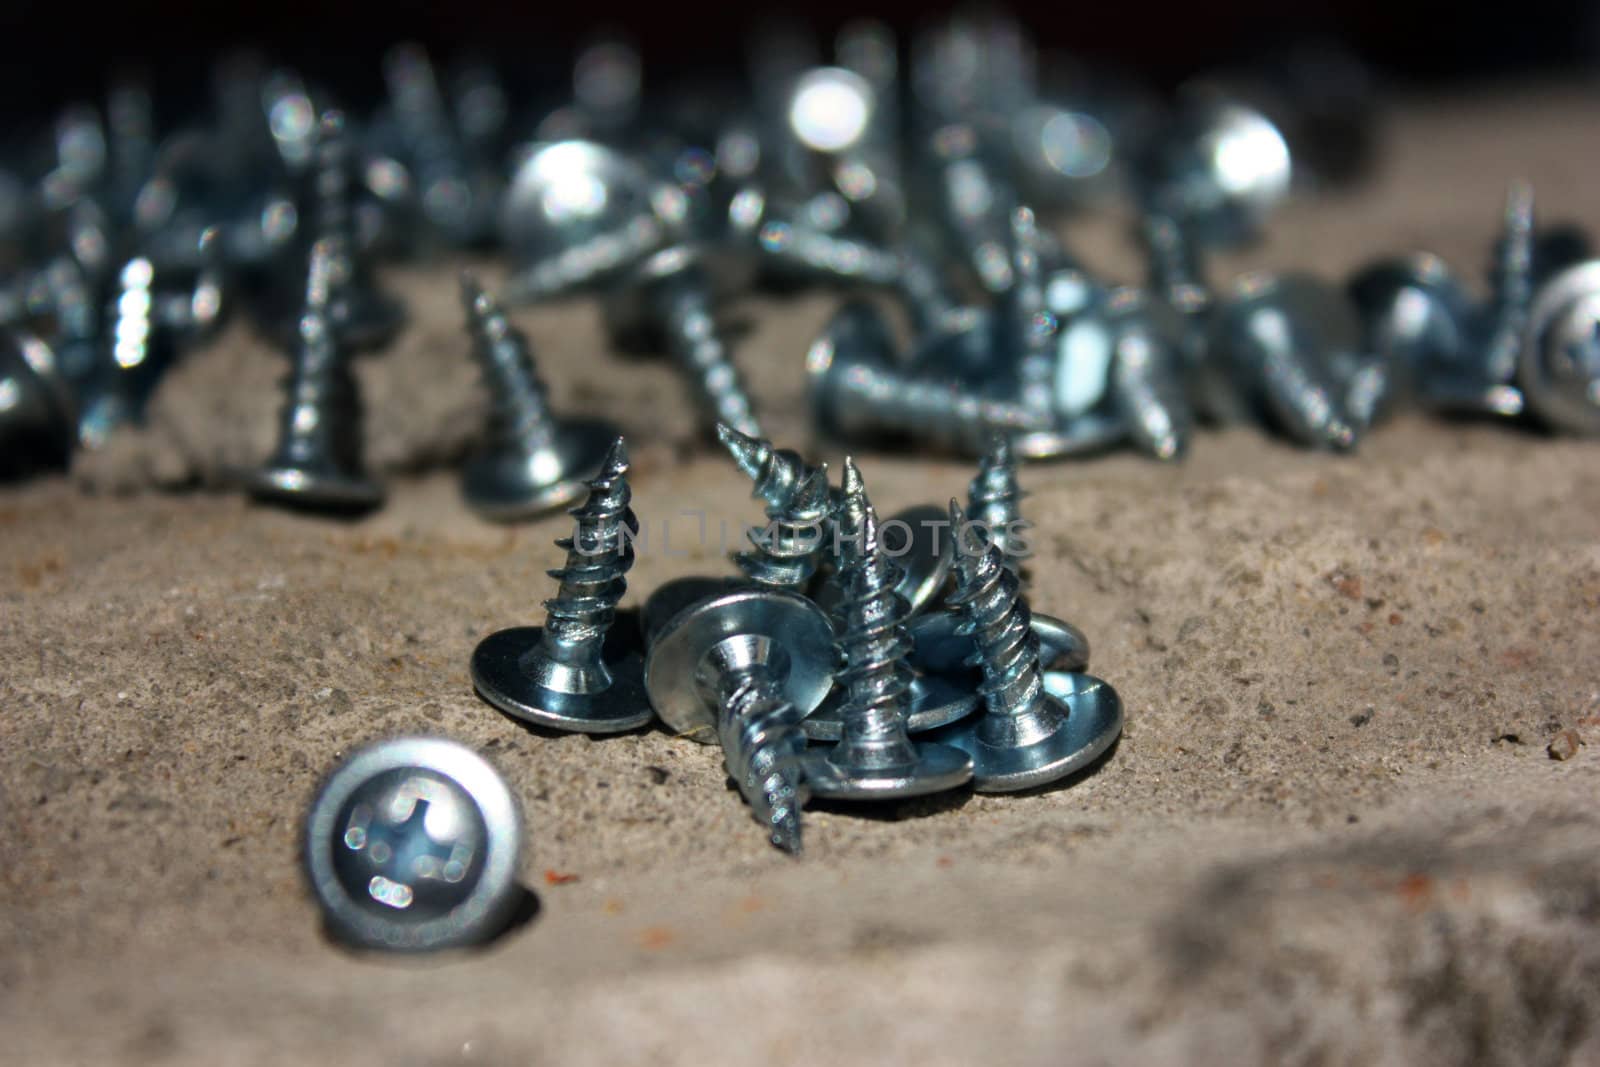 fasteners, screws for work, a lot of screws, screws, metal screws, screws shiny, new hardware